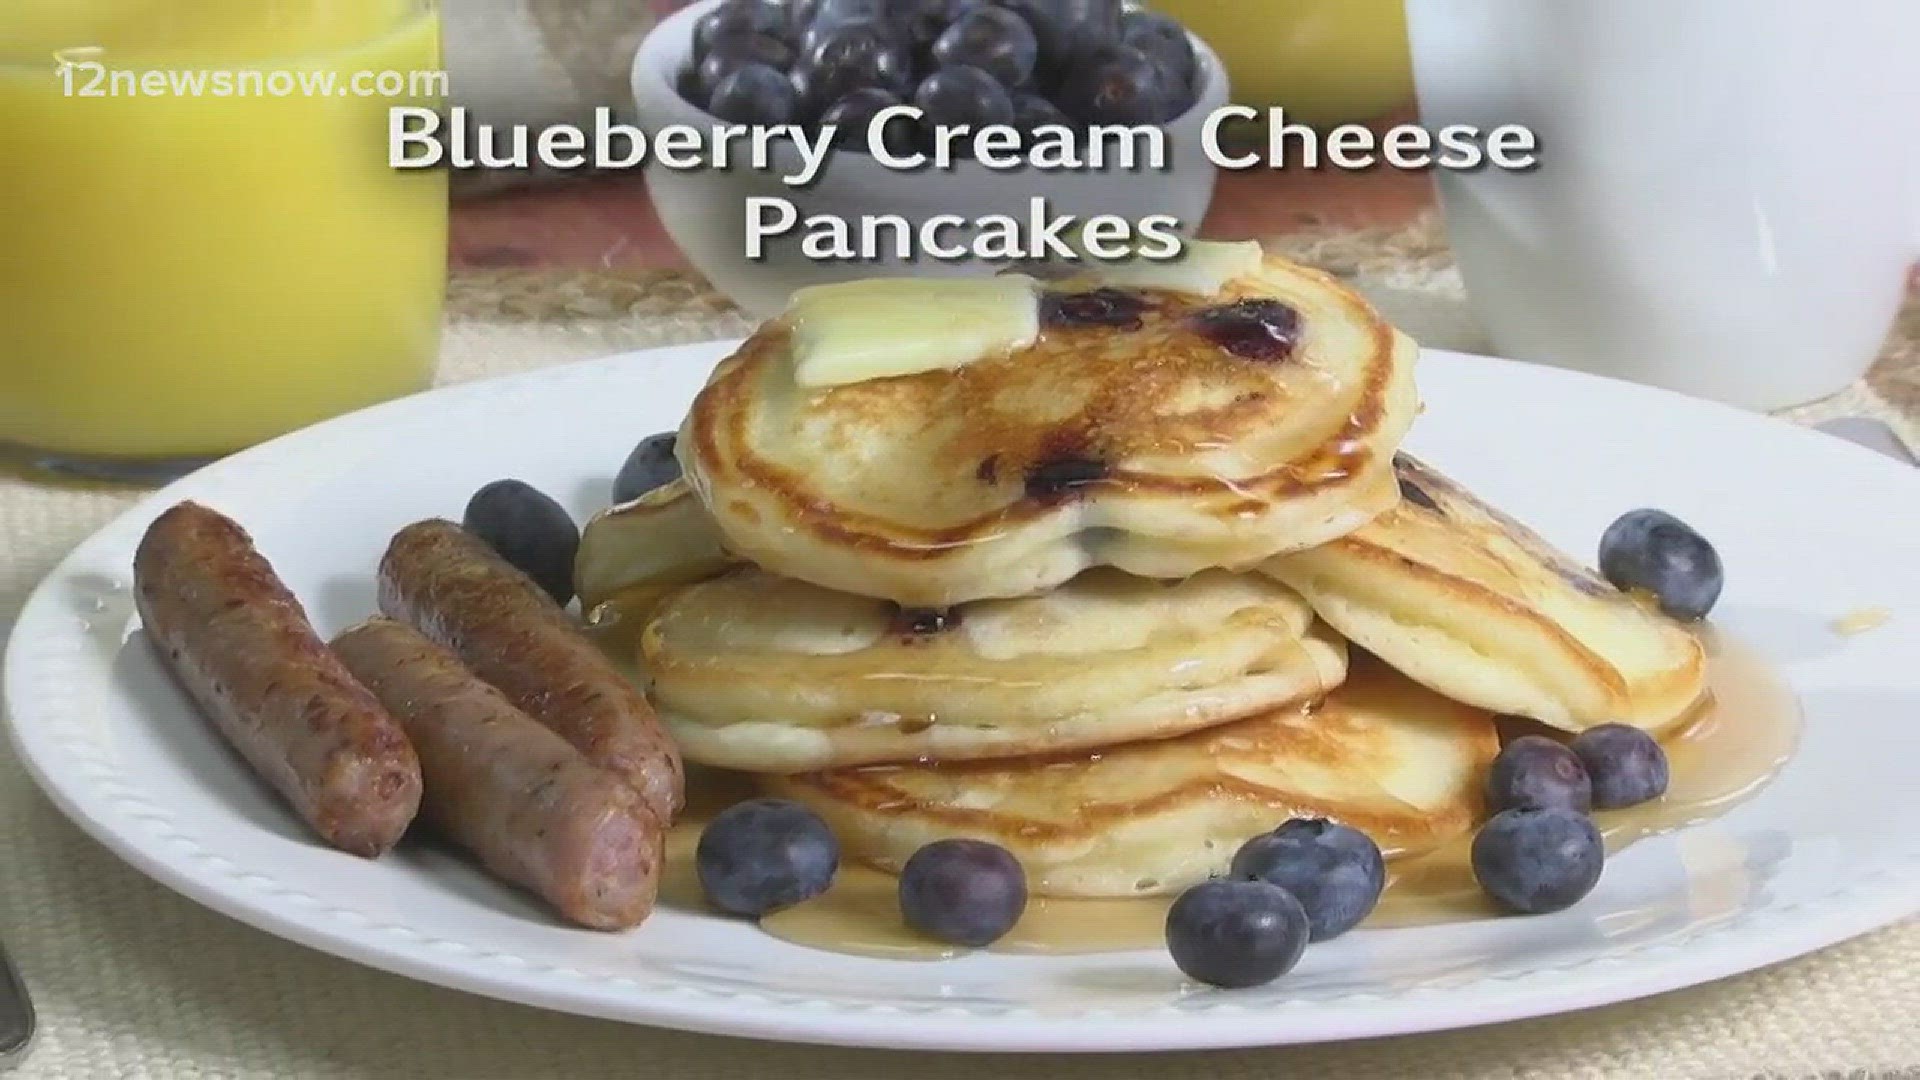 Mr. Food makes Blueberry Cream Cheese Pankcakes